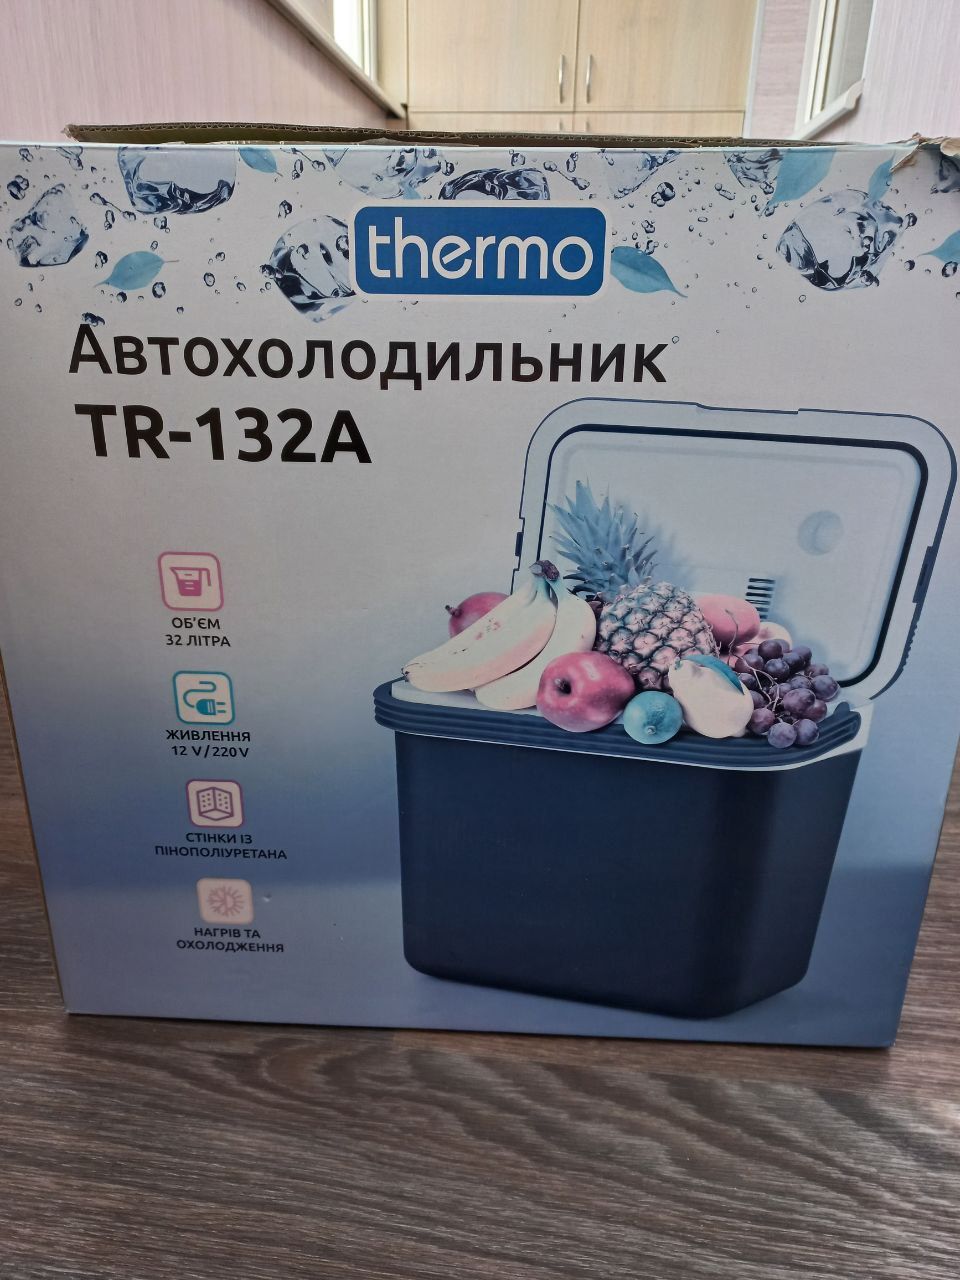 Автохолодильник Thermo 132a